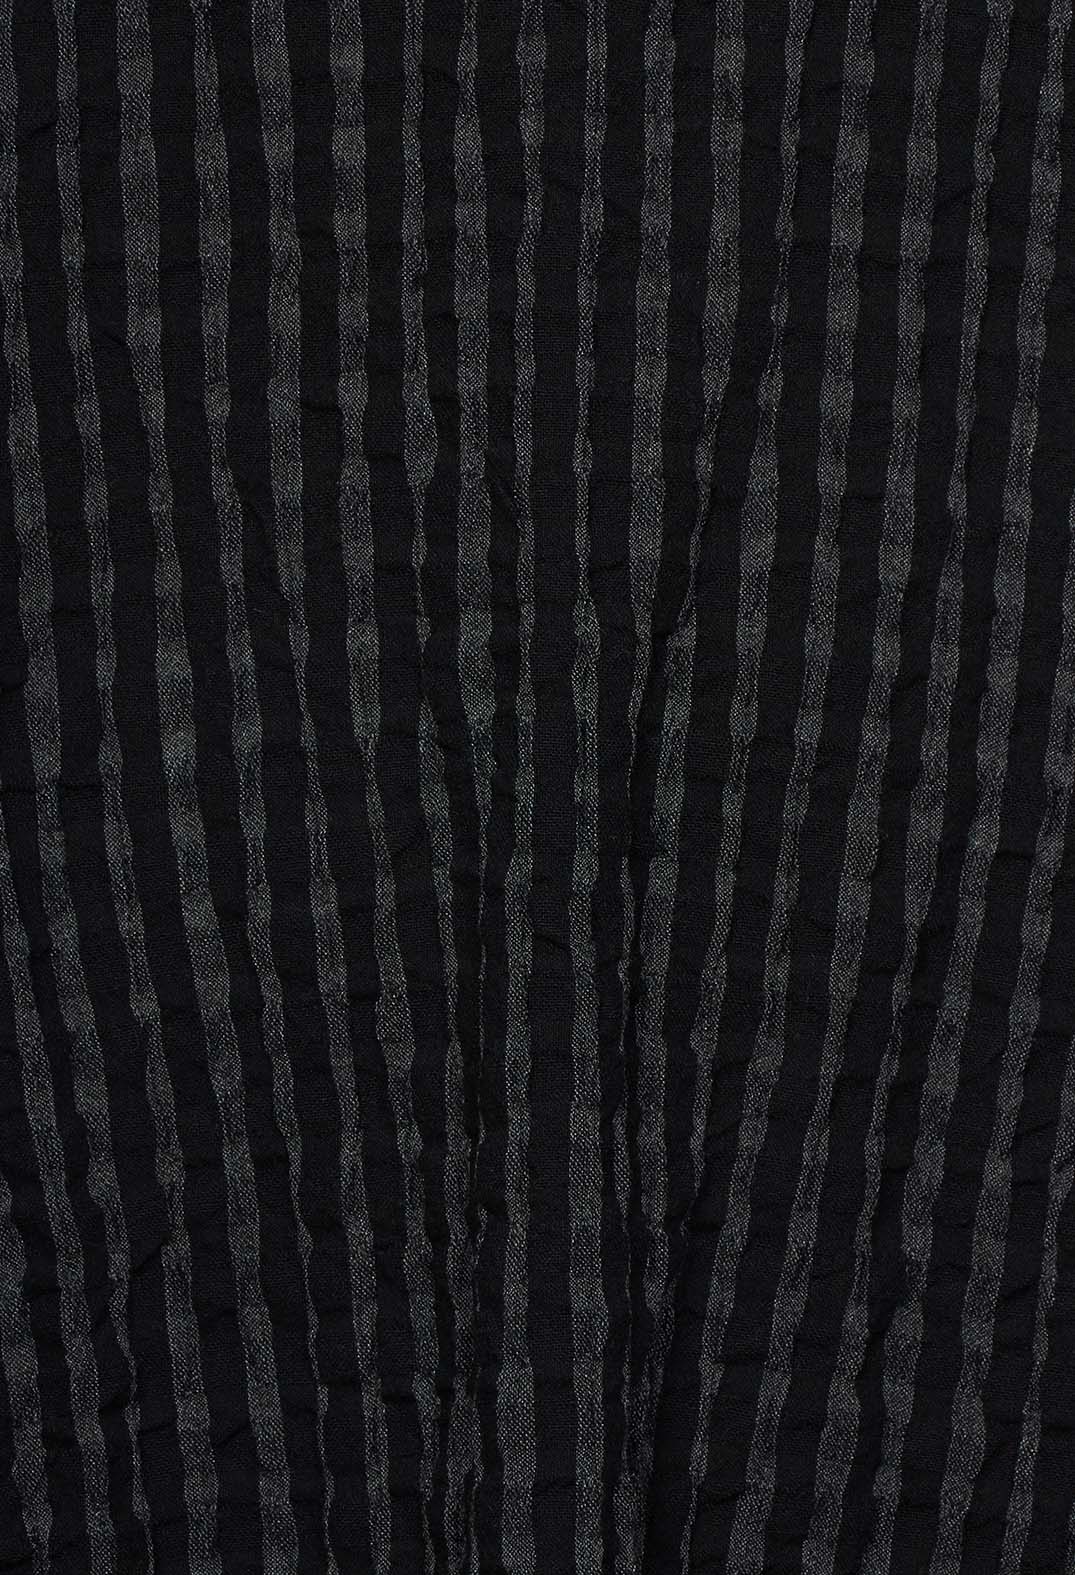 Horri Tunic in Grey and Black Stripe